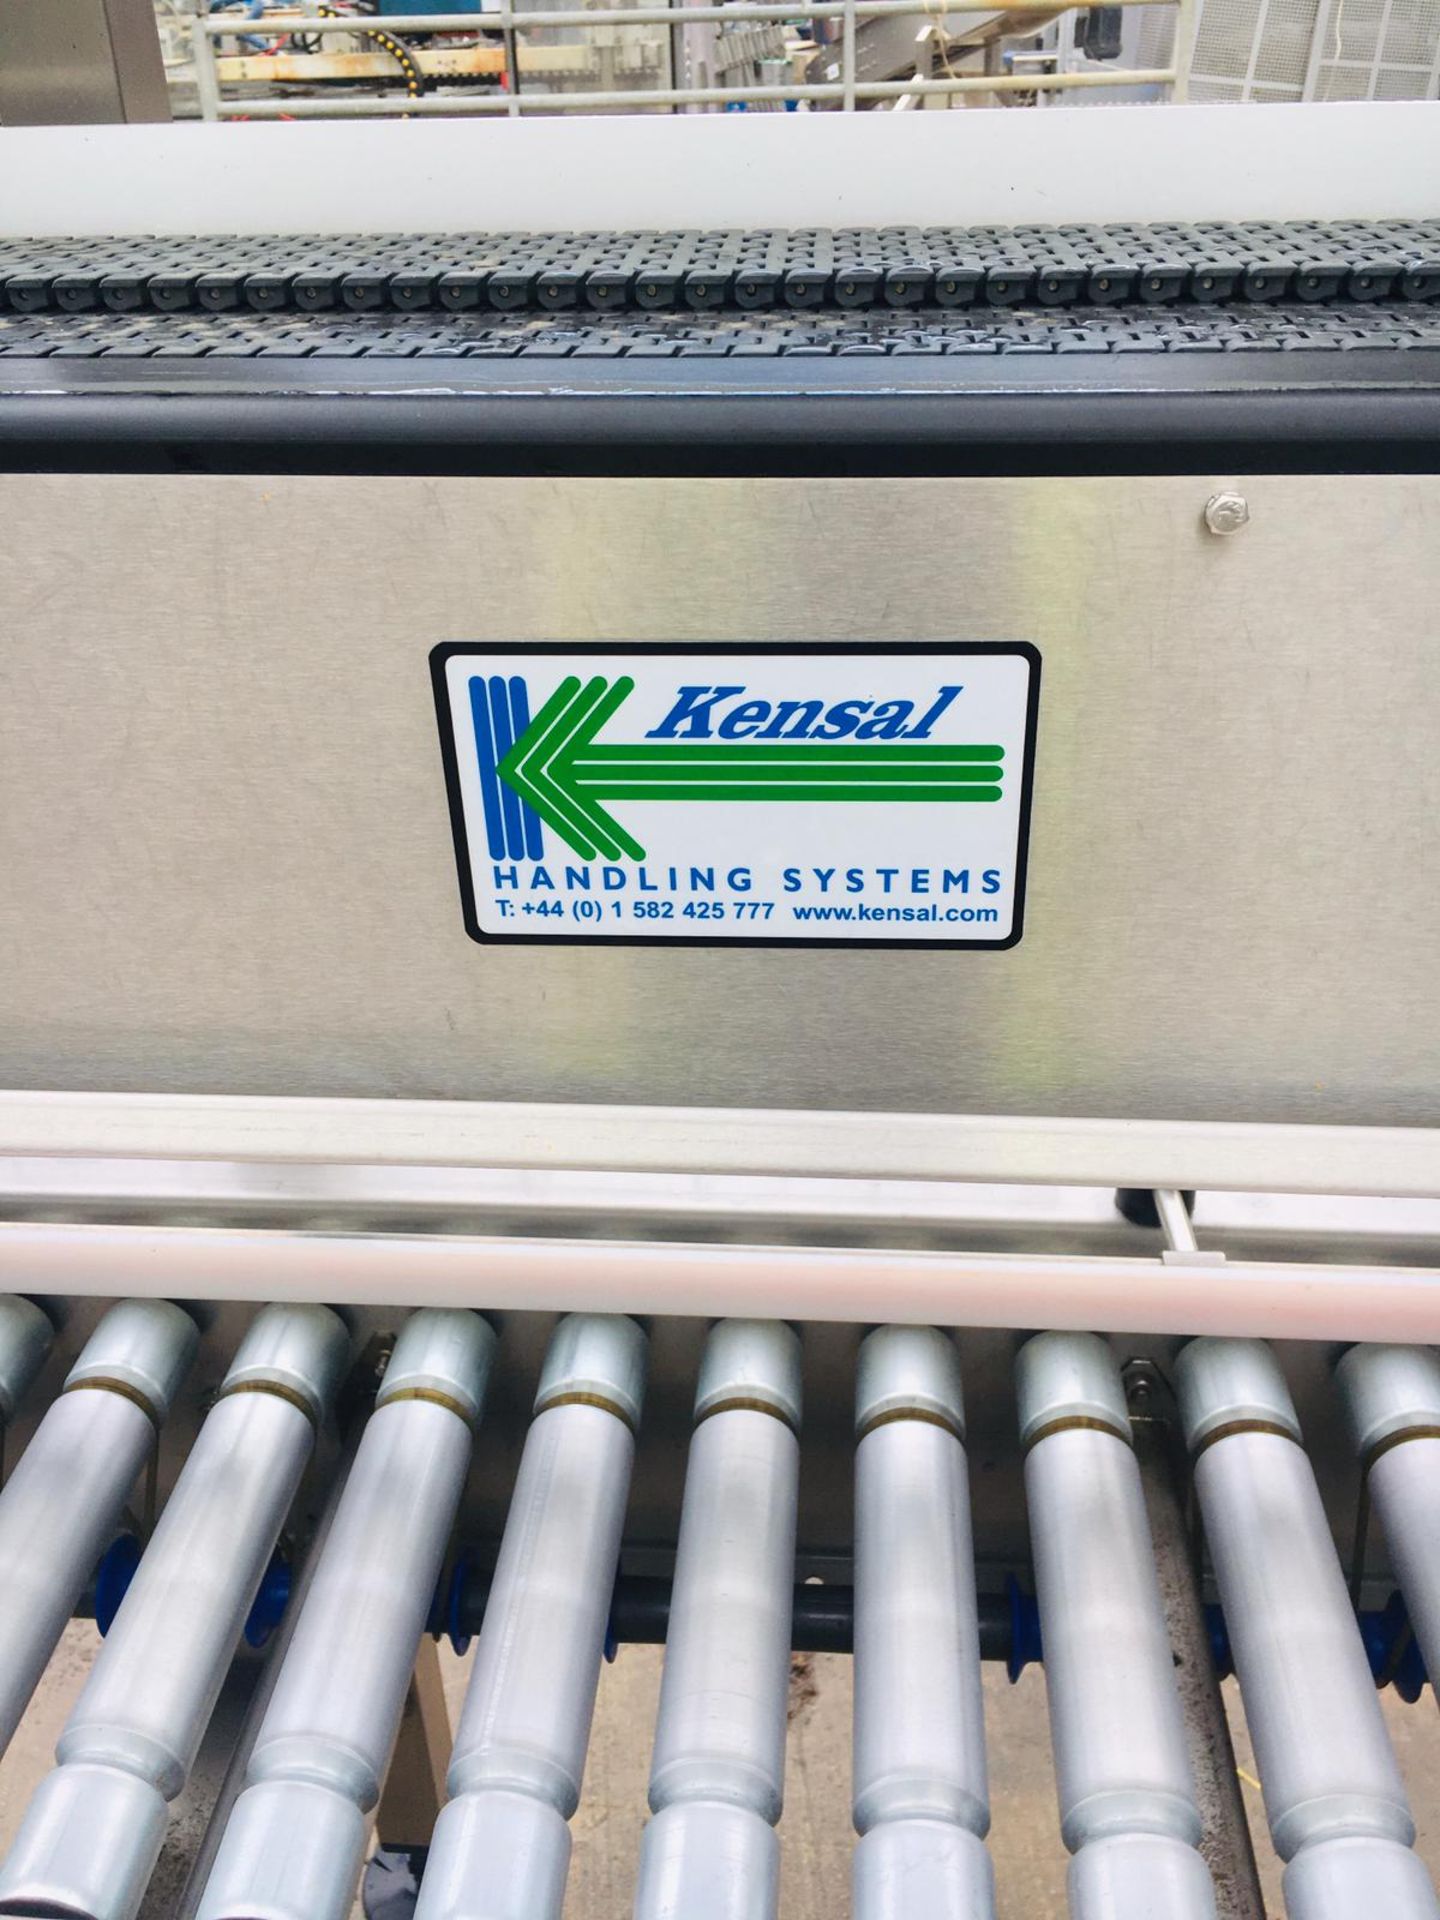 Kensal stainless steel Roller Conveyor, with inbui - Image 6 of 6